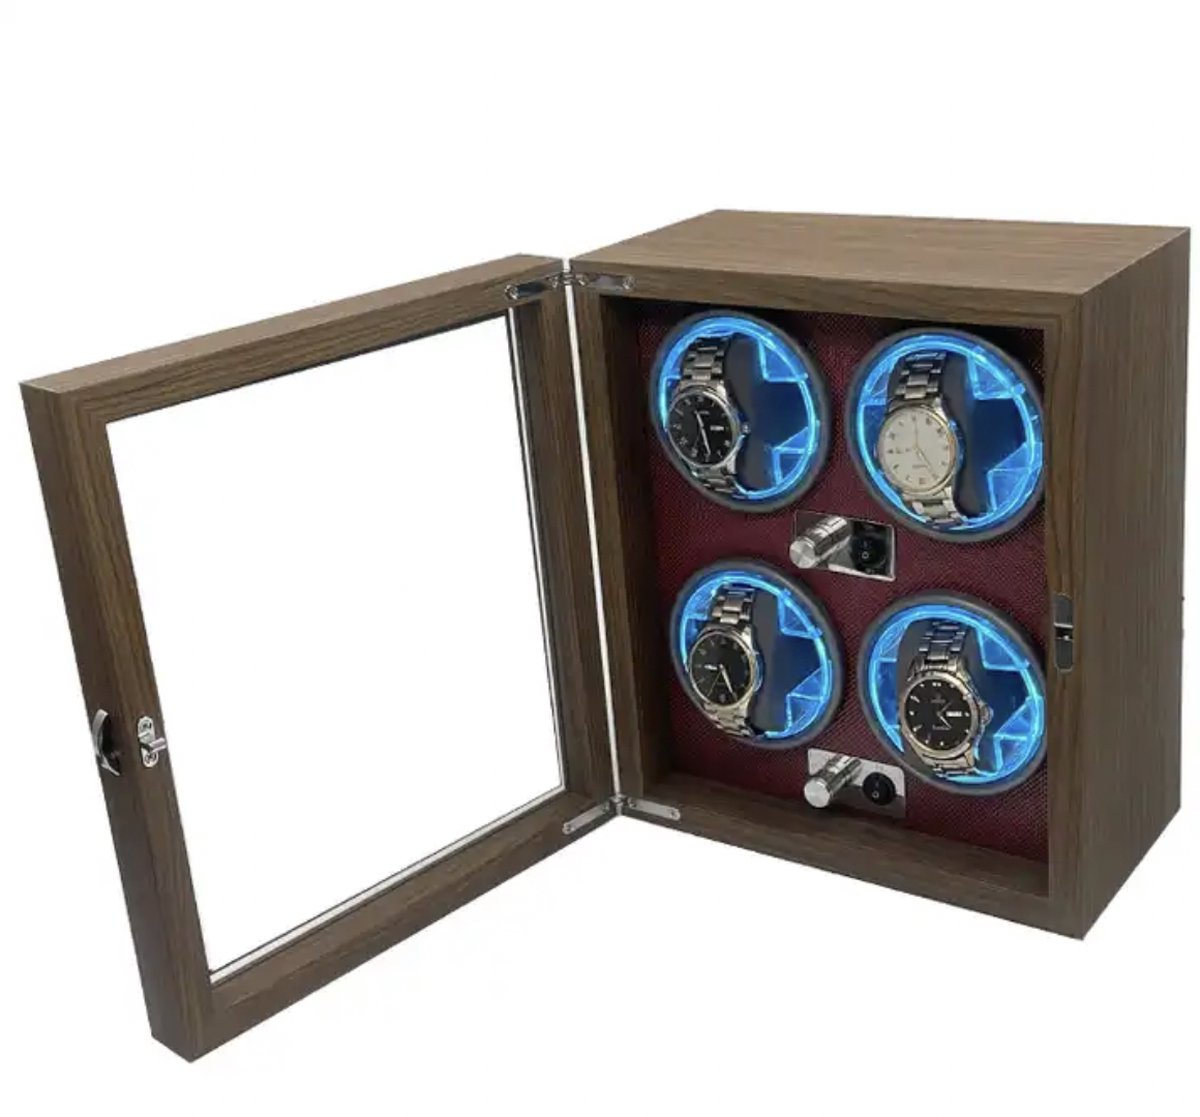 Watchwinder Hout met LED - Horloge Opwinder - Automatische Horloge Winder voor 4 horloges - Horlogebox - Rood - Valentijnsdag cadeau